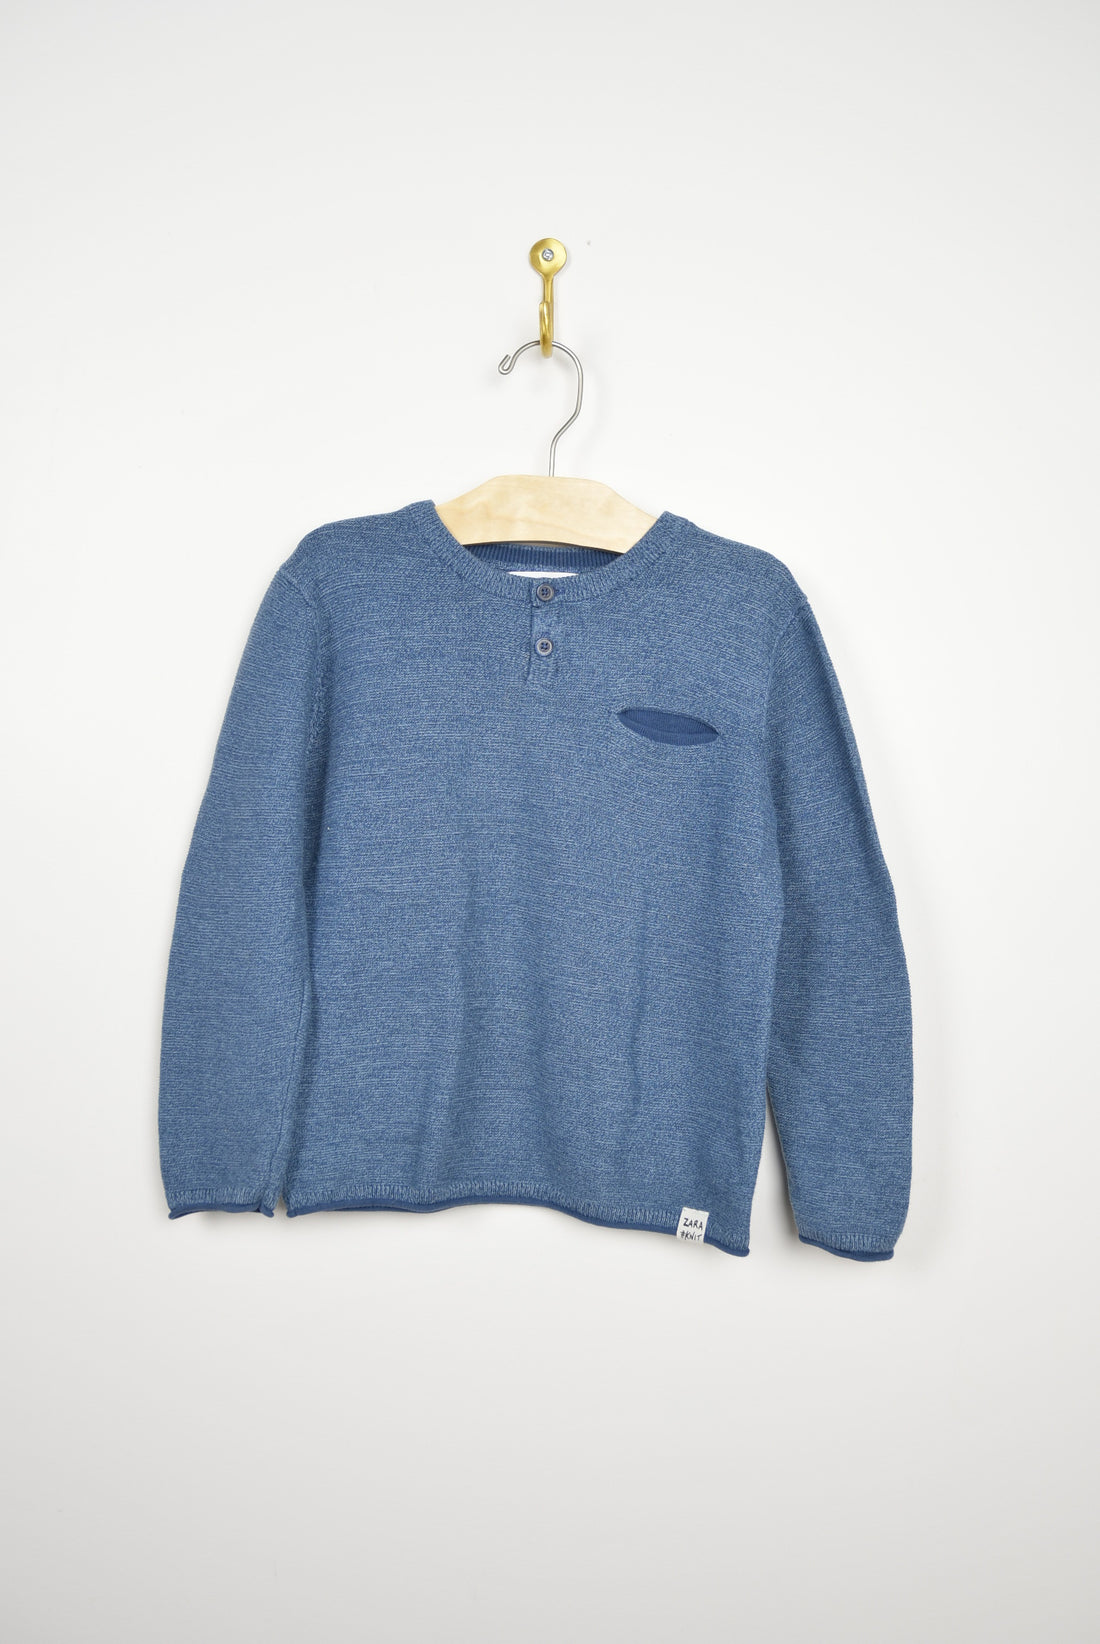 Zara Zara Blue Knit Sweater - 6Y